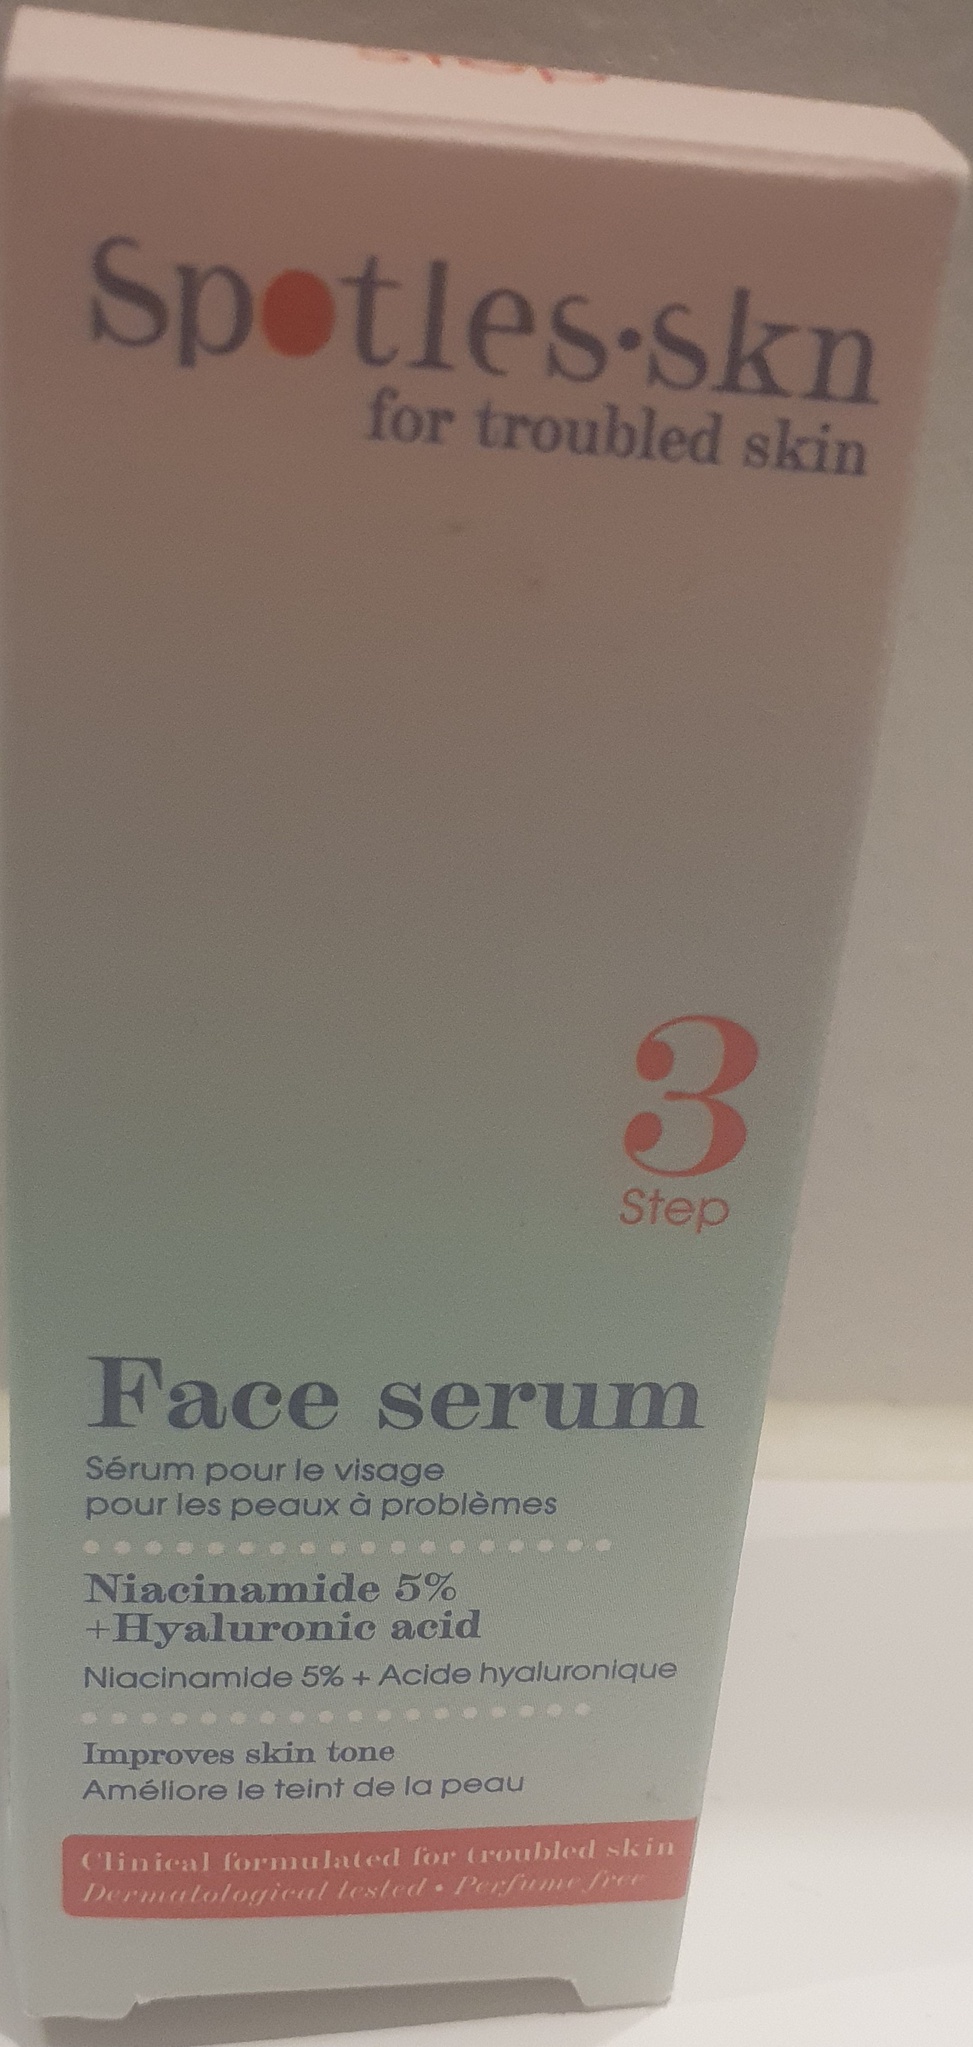 Spotles skn Face Serum Niaciamide 5% + Hyaluronic Acid